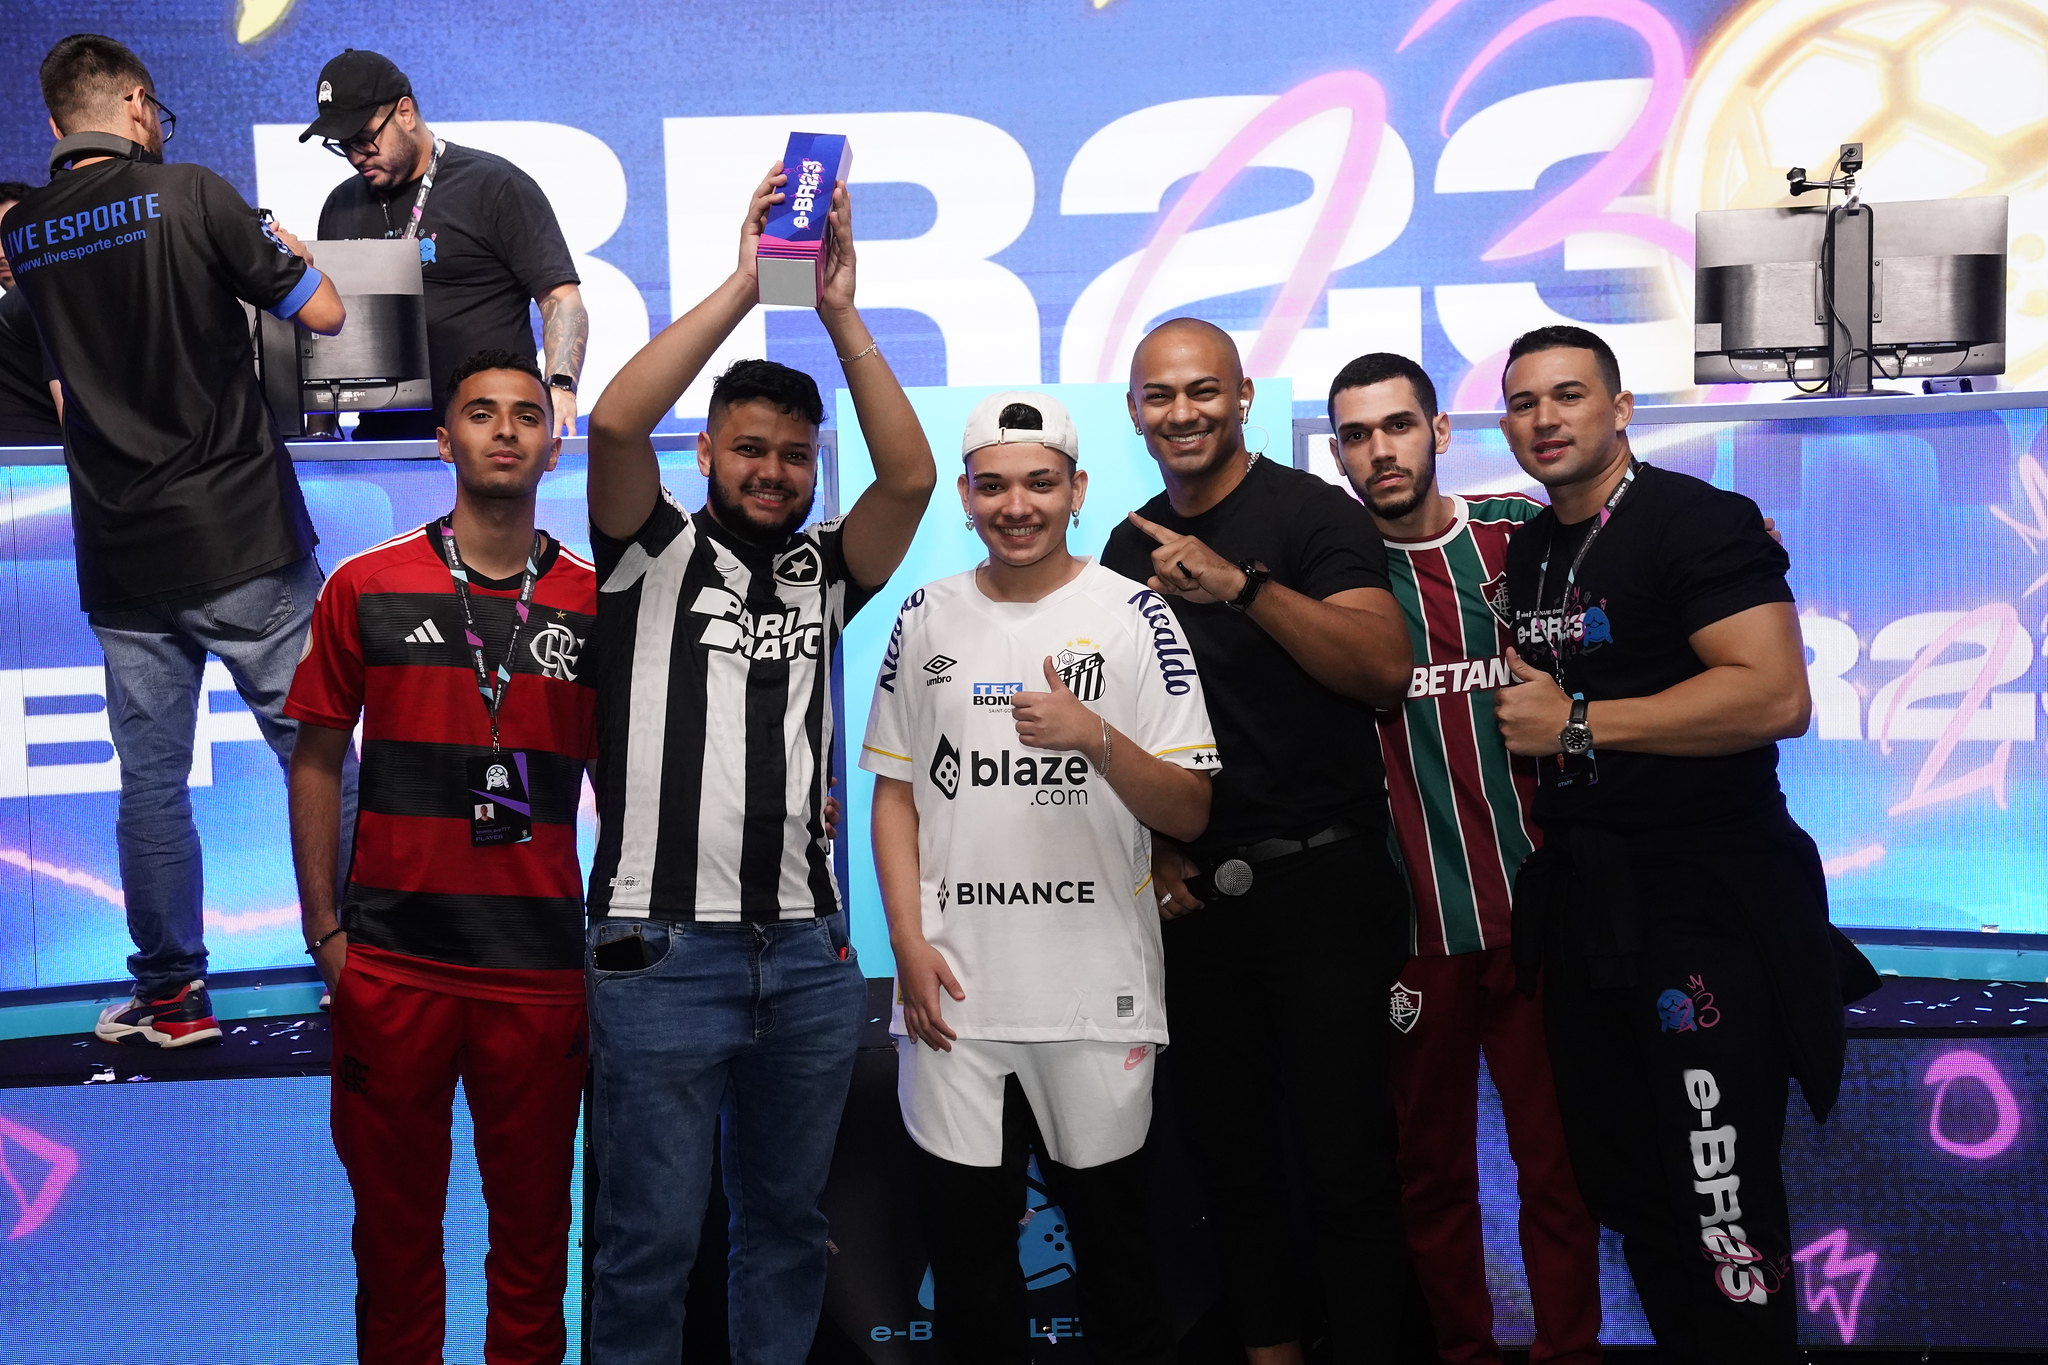 Gamer amazonense vence e-Footboll promovido pela CBF